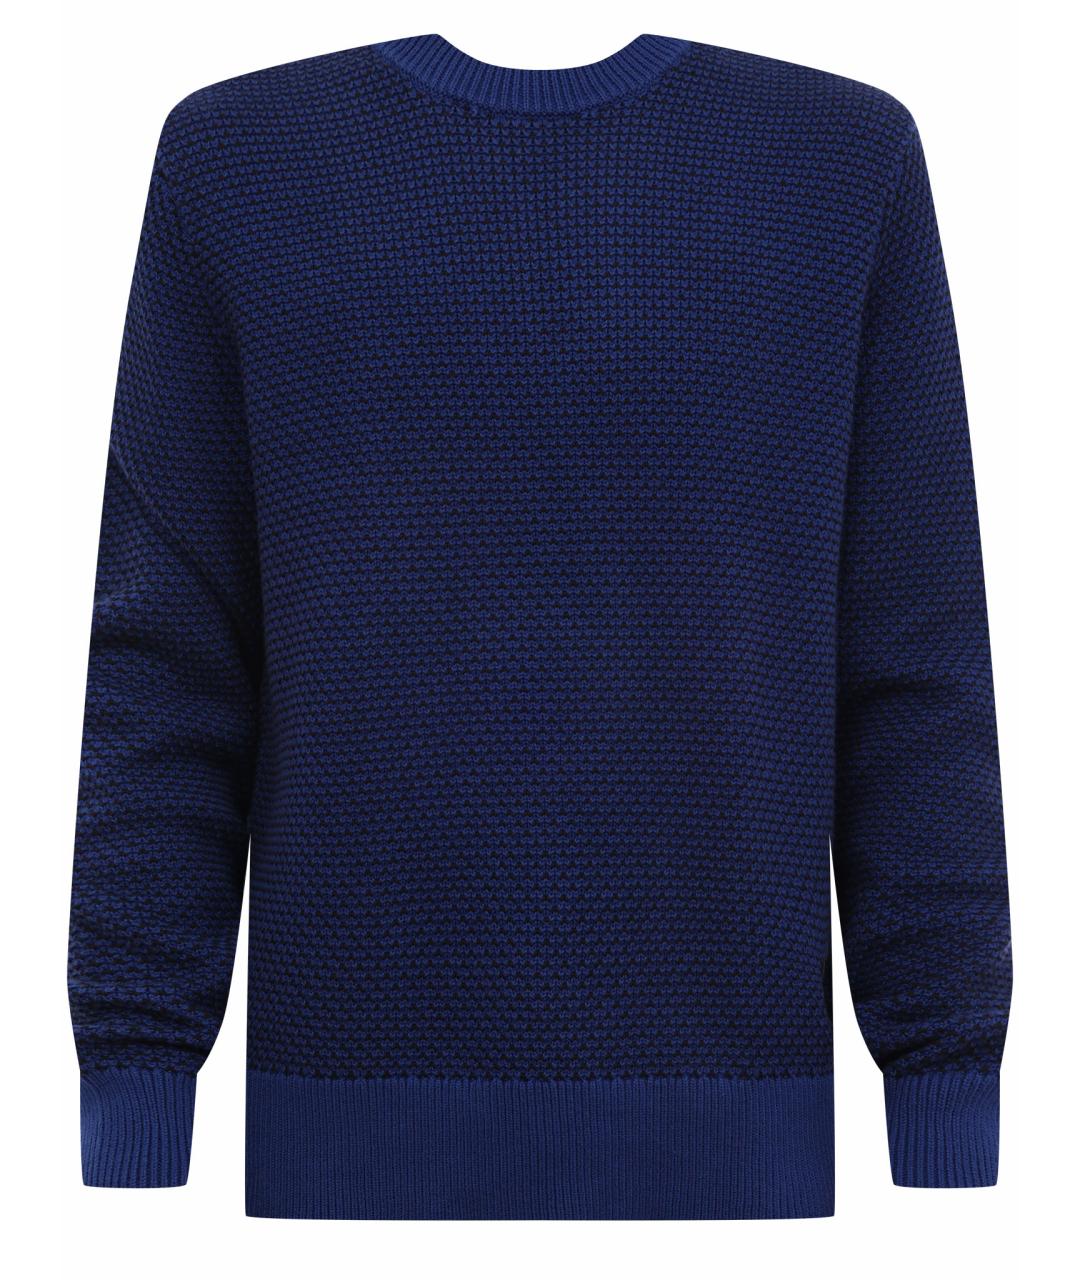 CALVIN KLEIN Темно-синий джемпер / свитер, фото 1